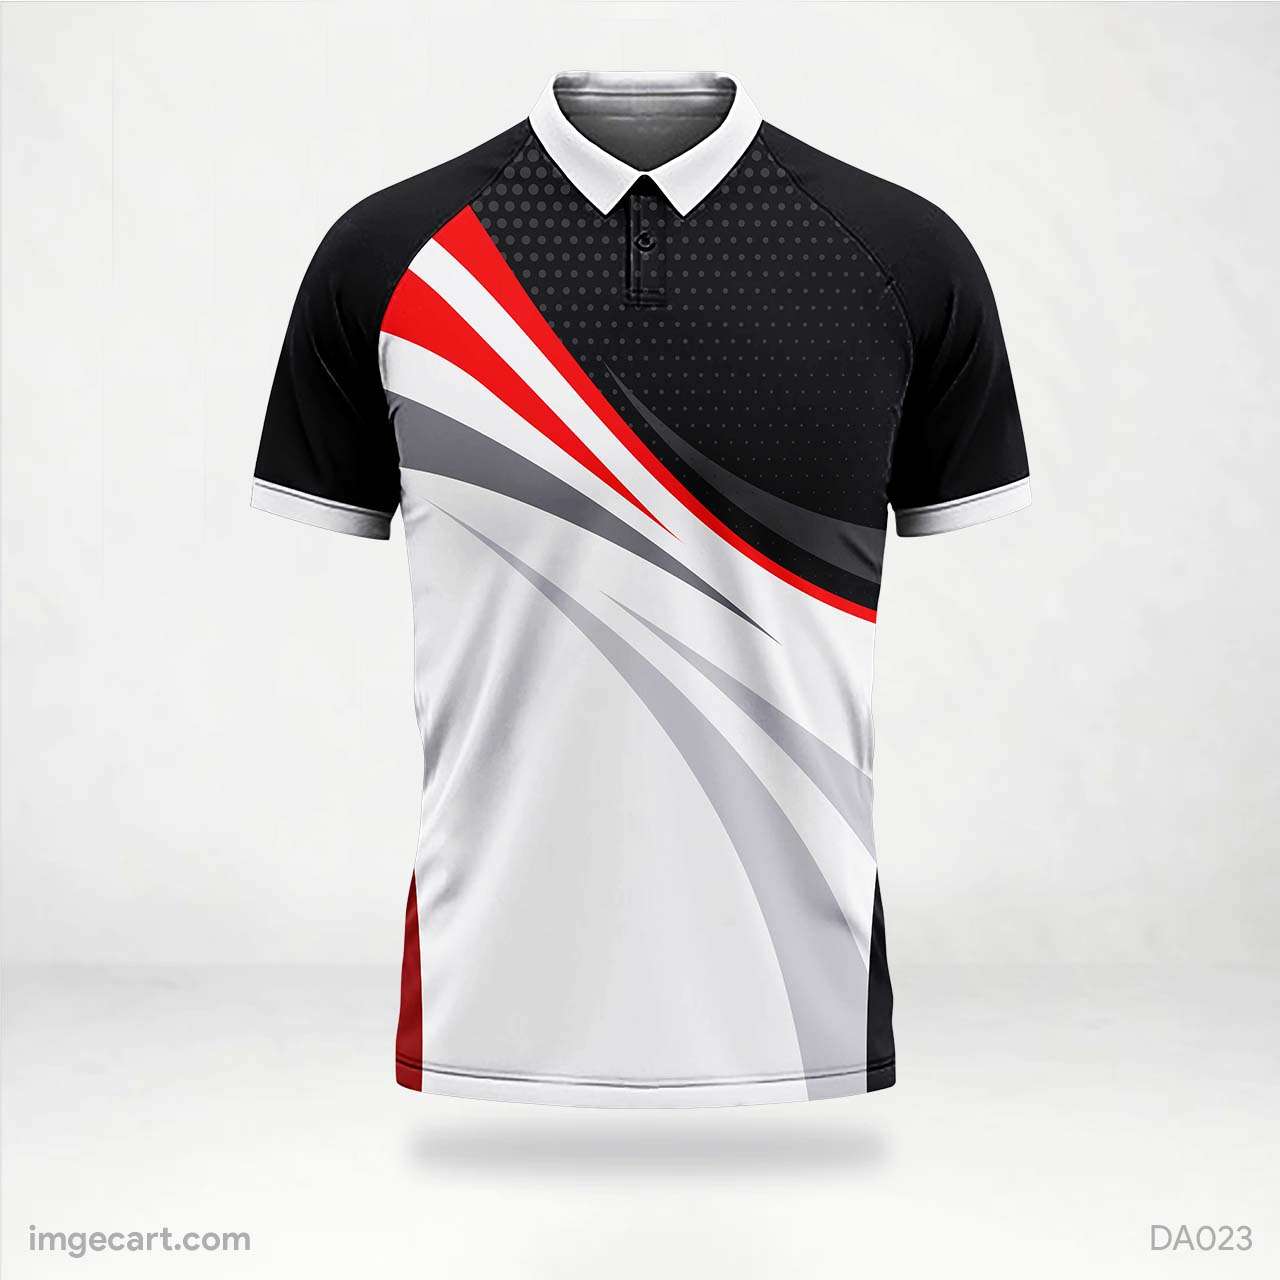 Cricket Jersey Design Red and Black - imgecart